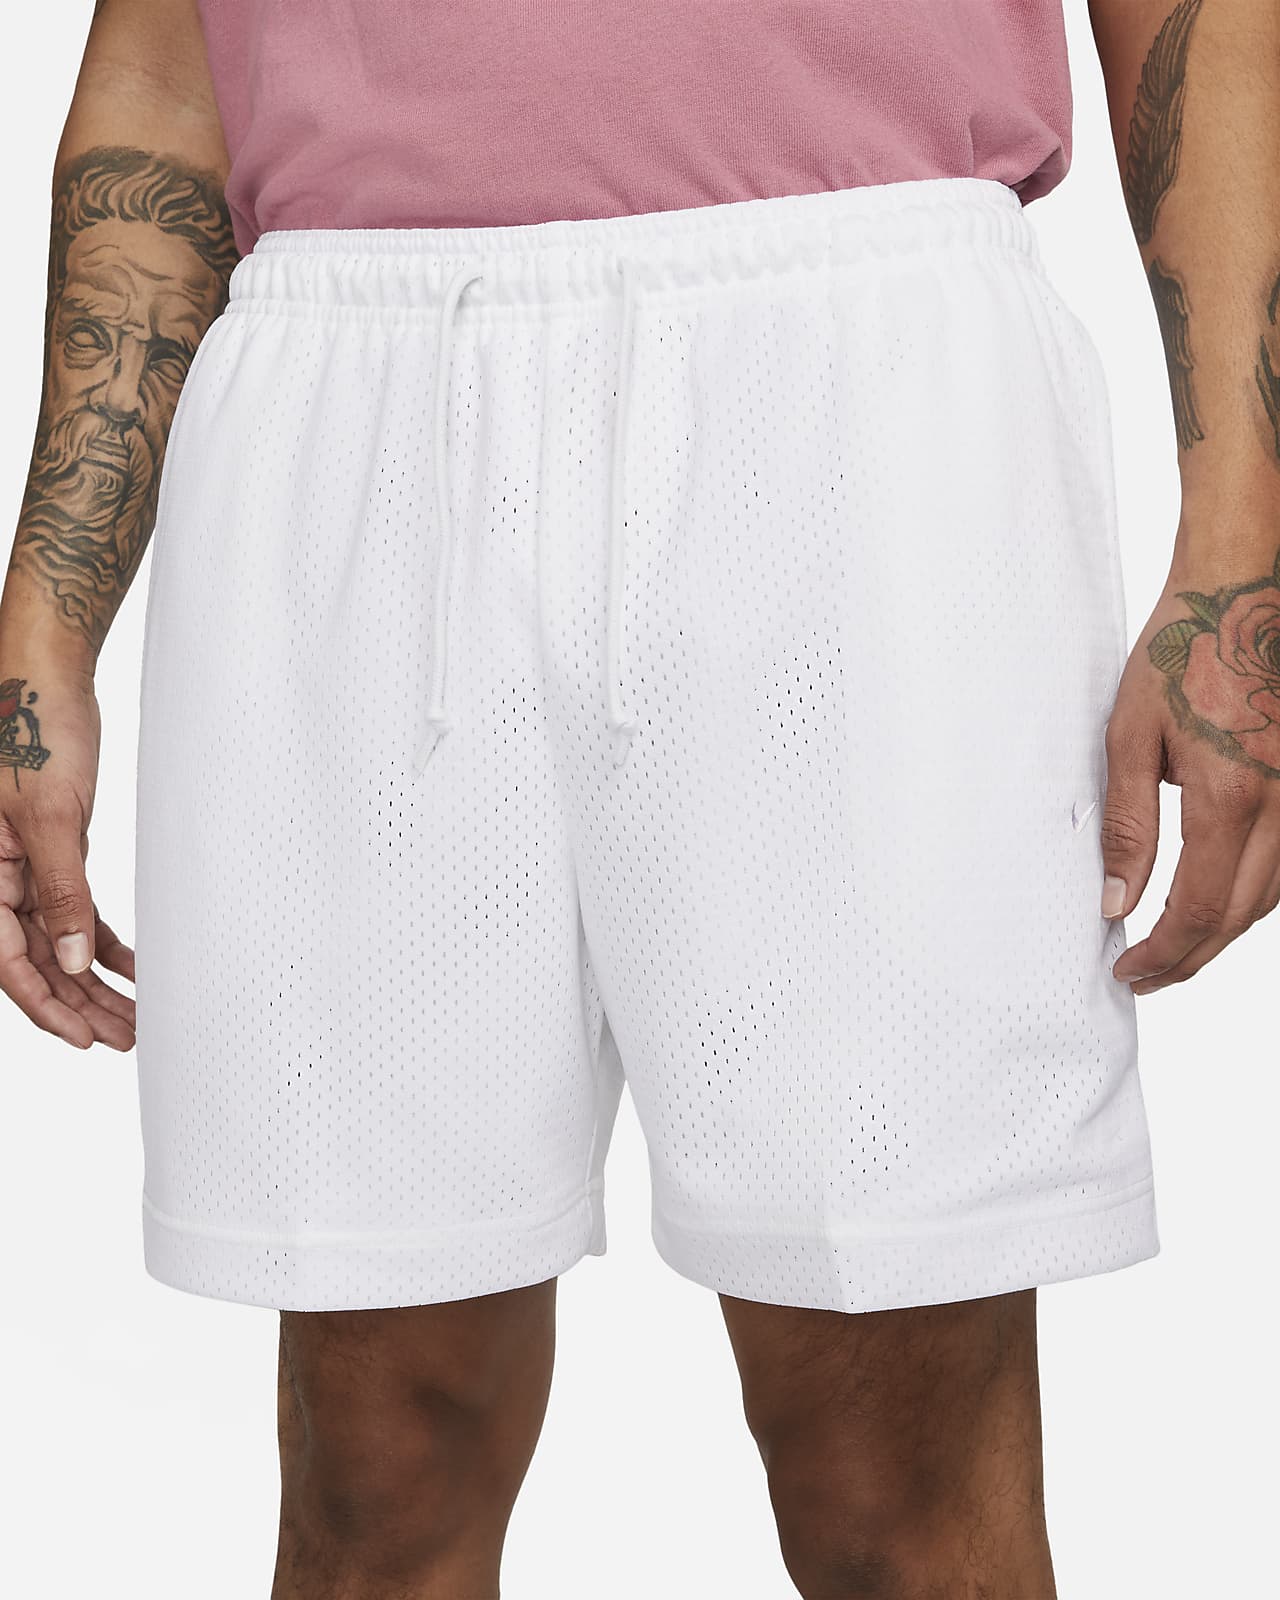 Nike Sportswear Authentics Men\'s Shorts. Mesh